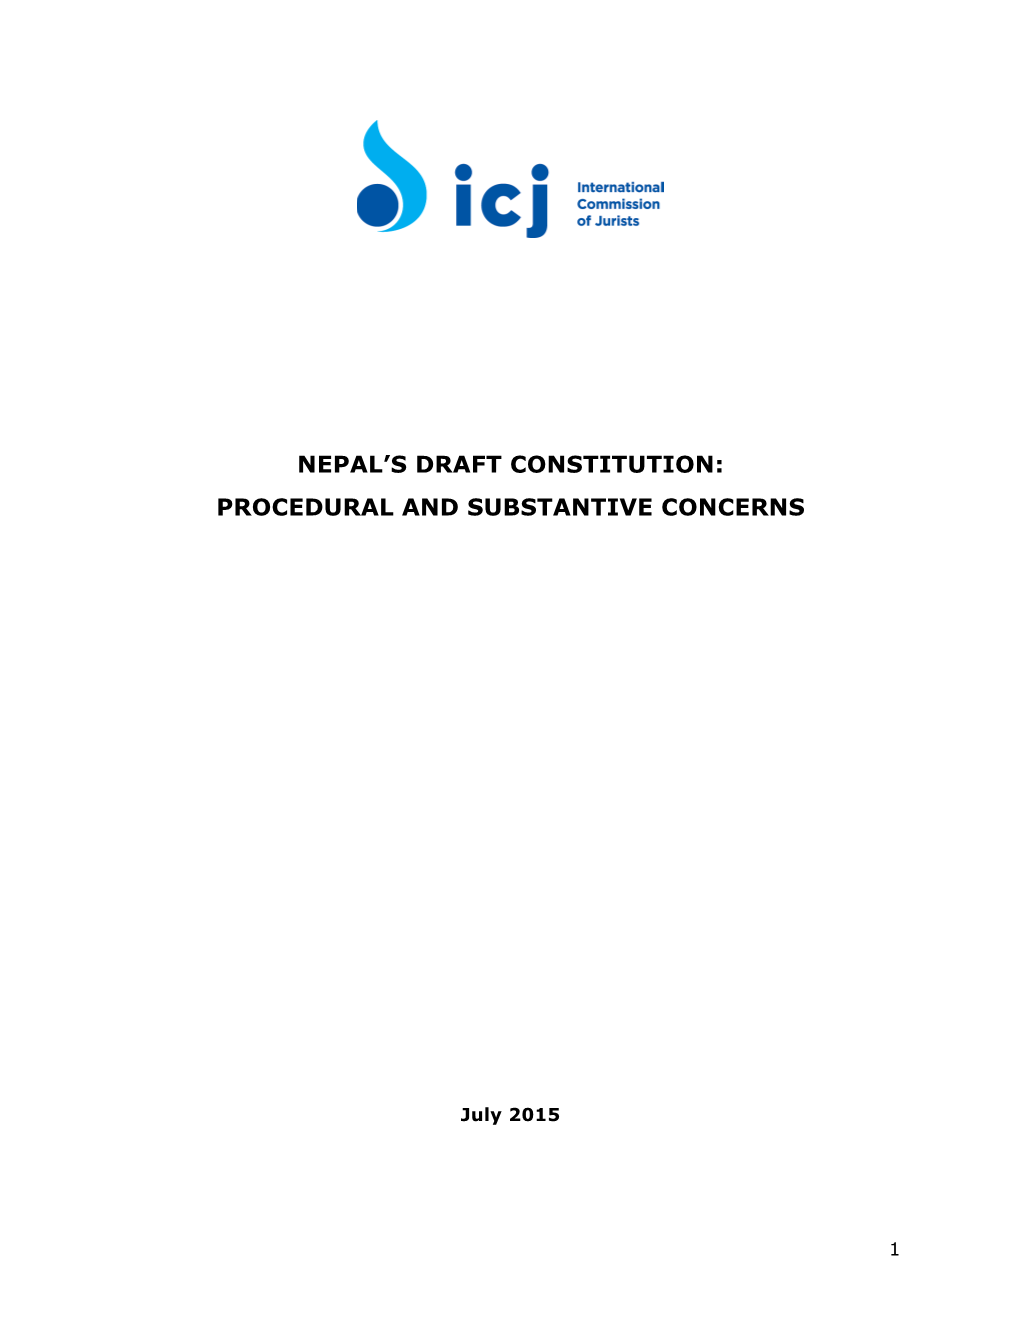 Nepal's Draft Constitution